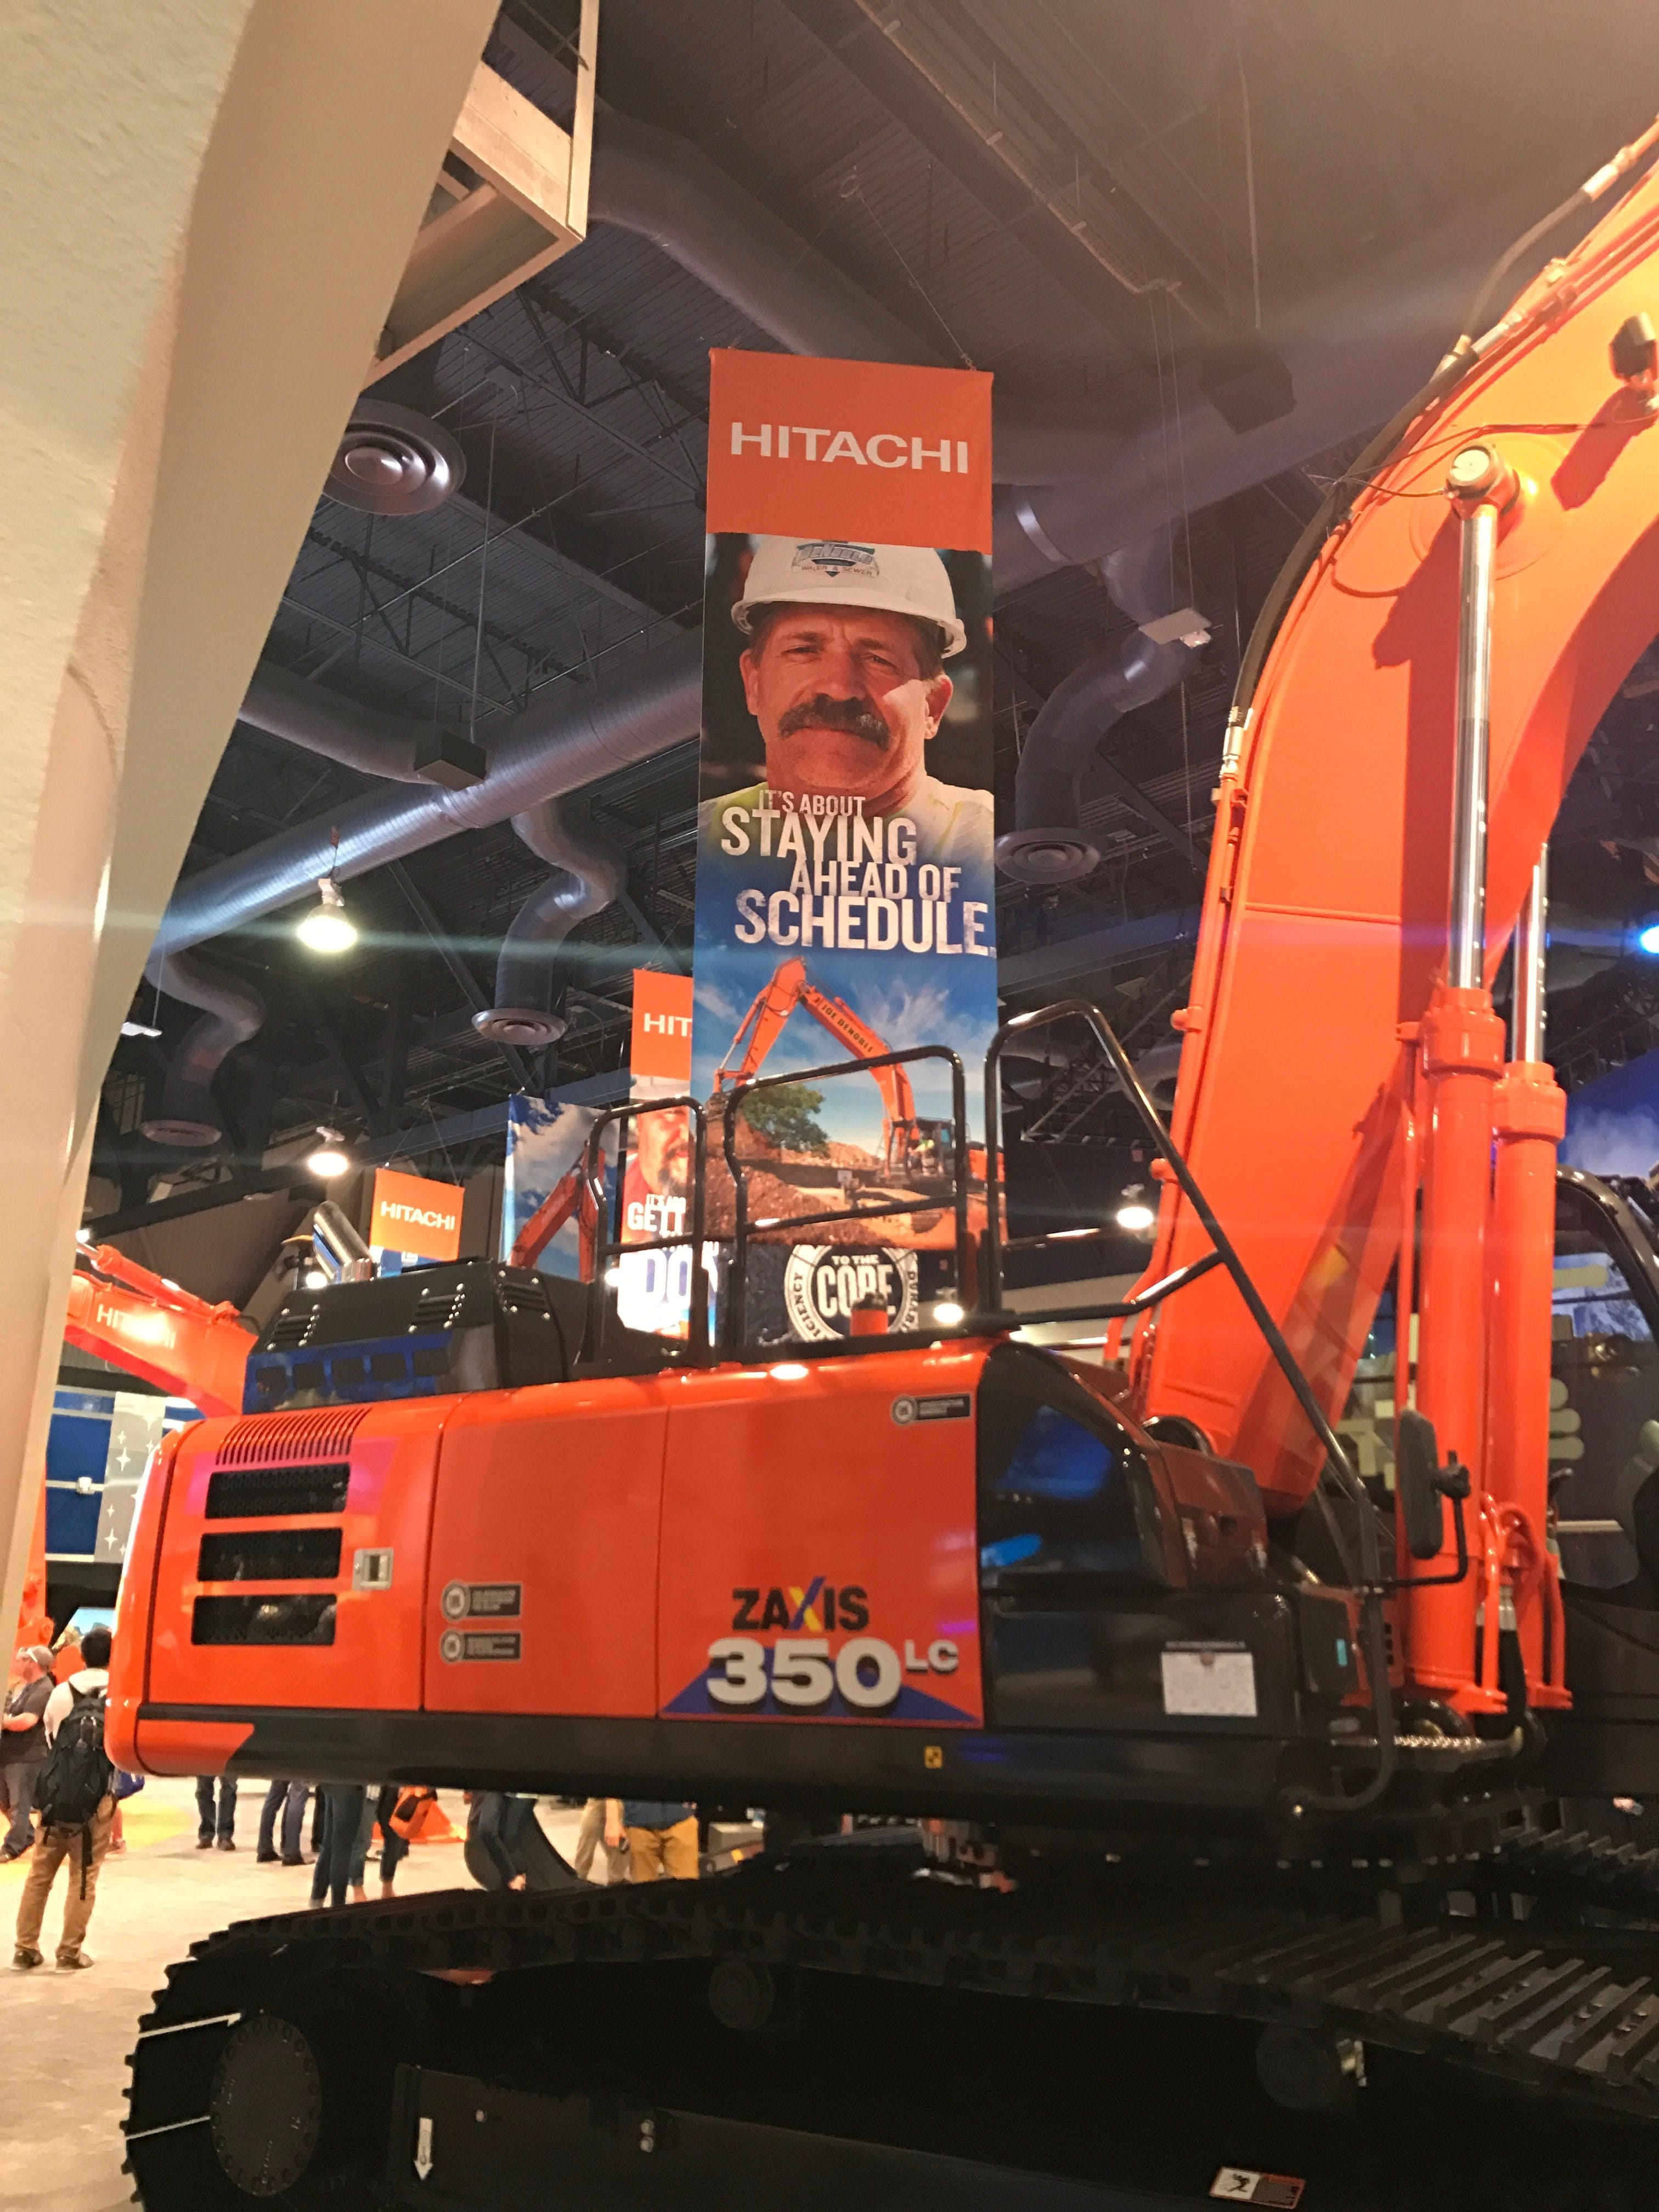 Hitachi setup at the Las Vegas Construction Expo in 2017.